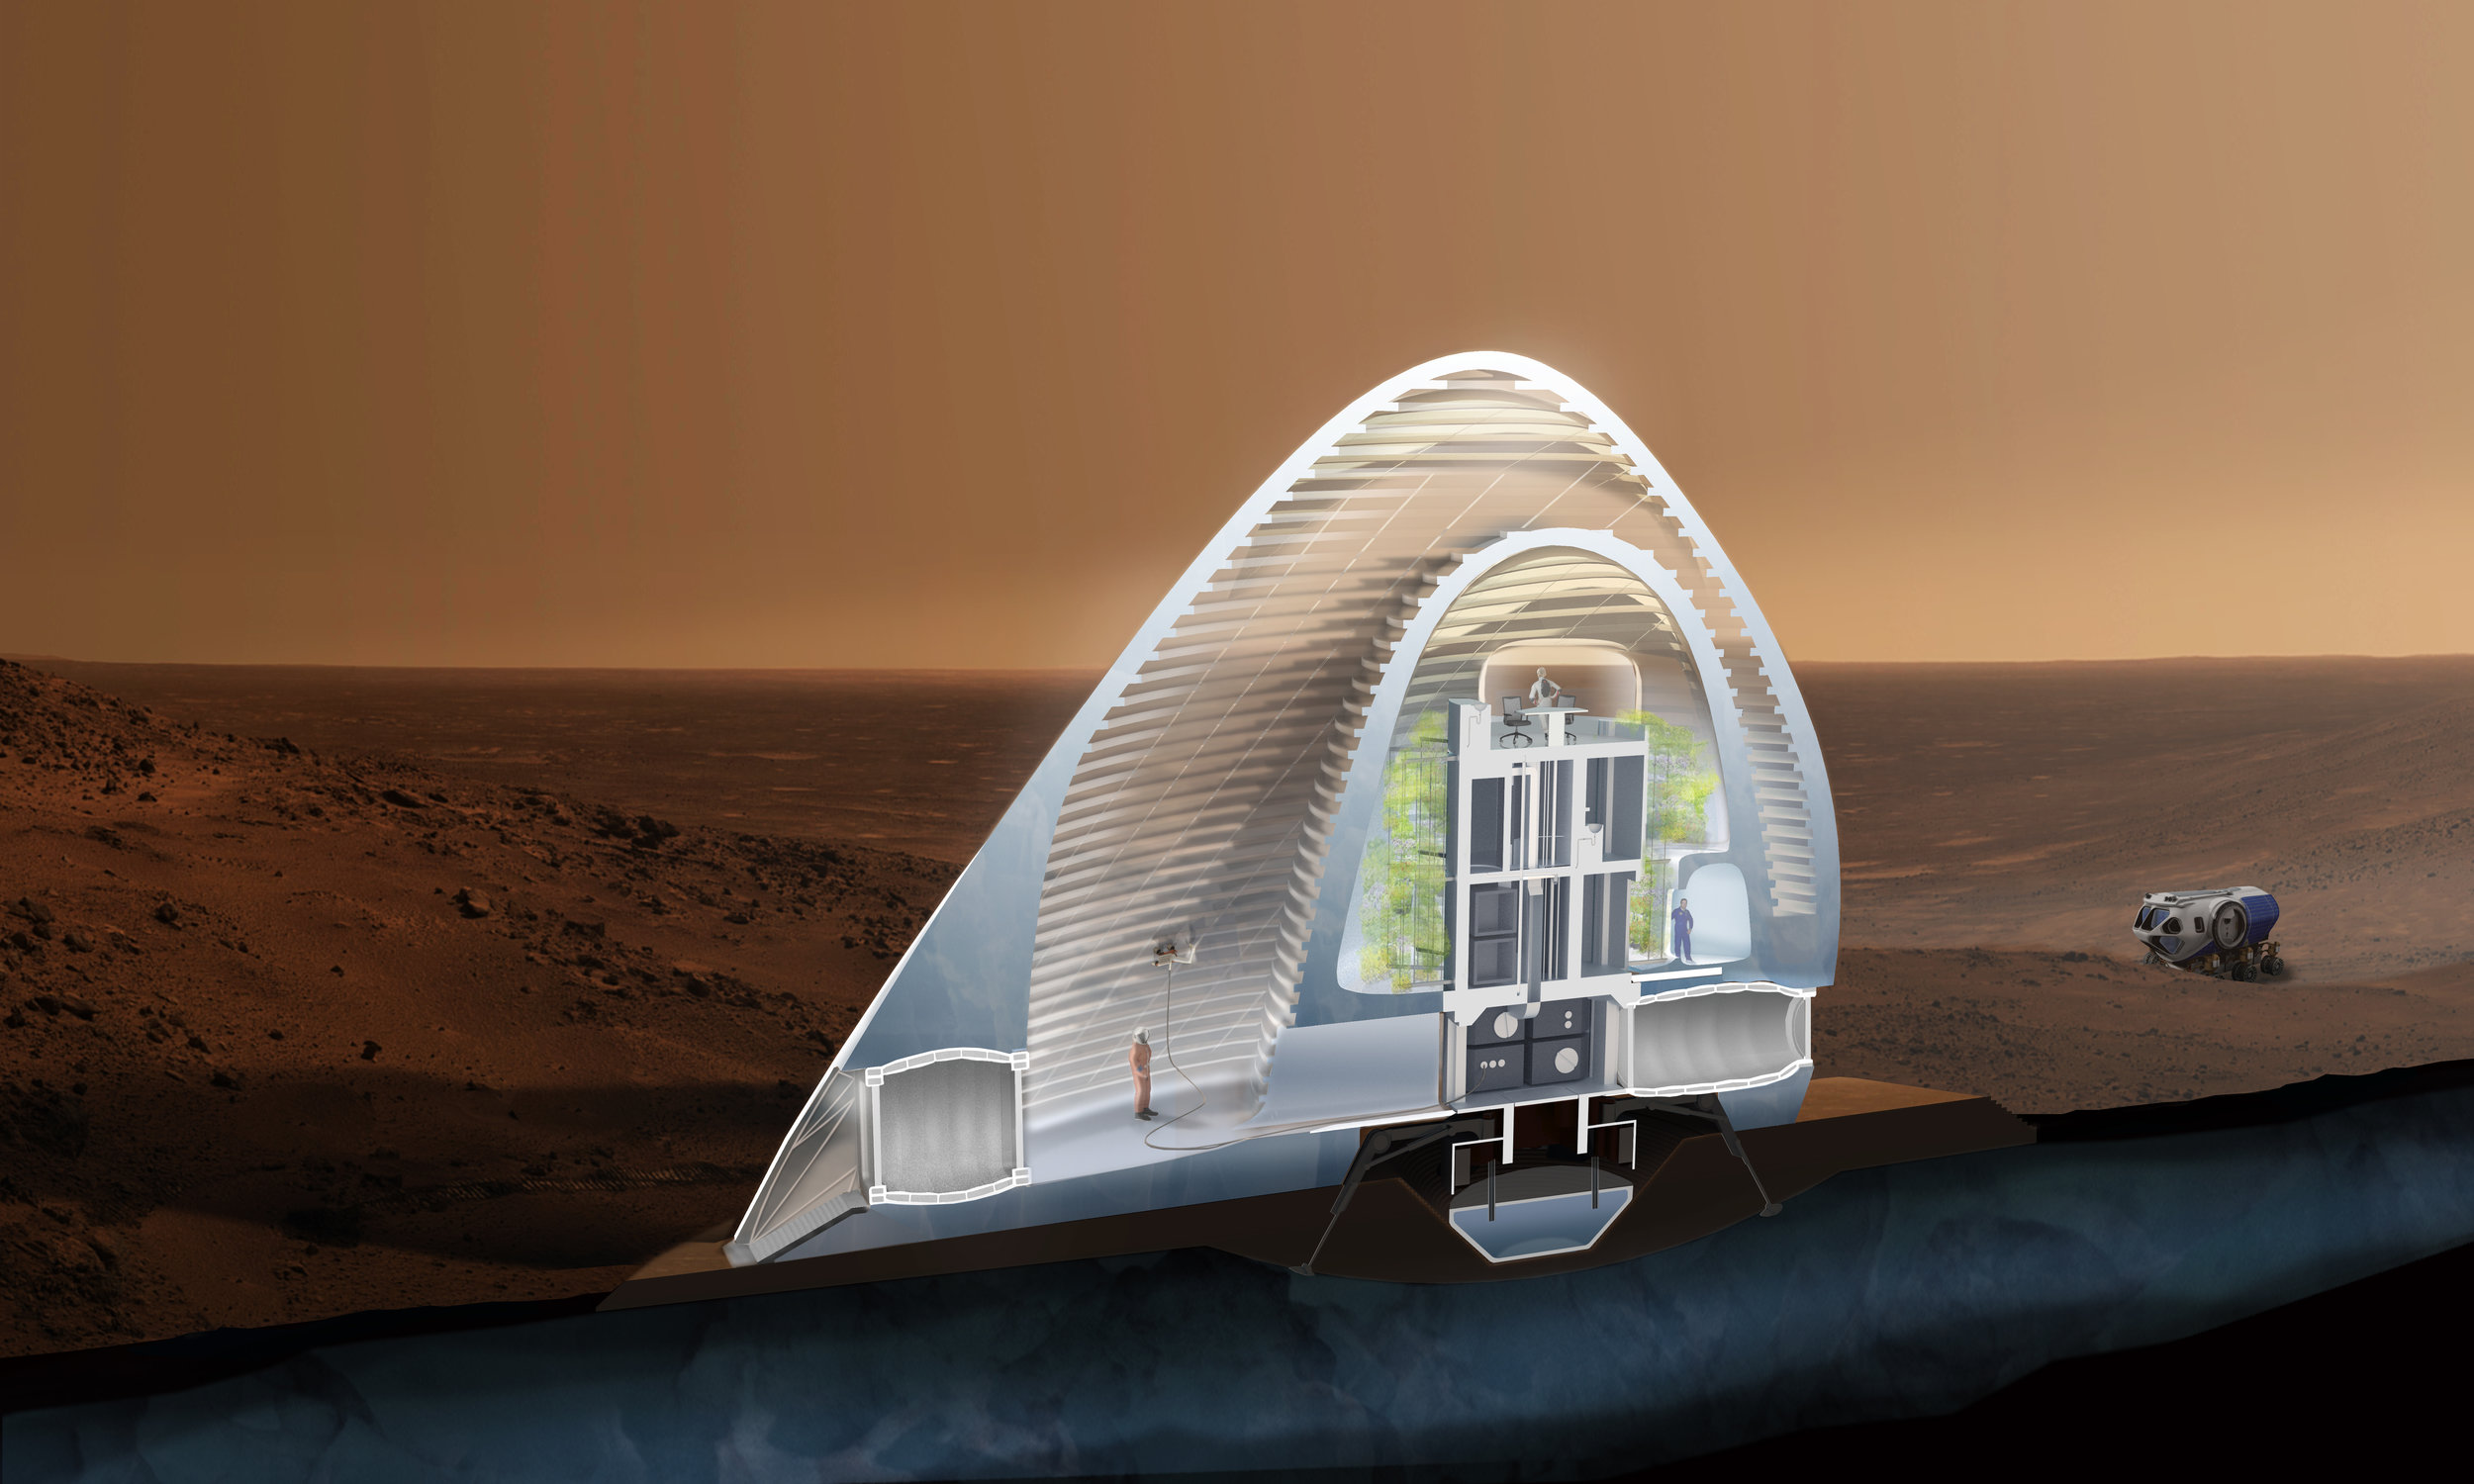 Mars Ice House: NASA's 3D-Printed Habitat Challenge — Melodie Yashar